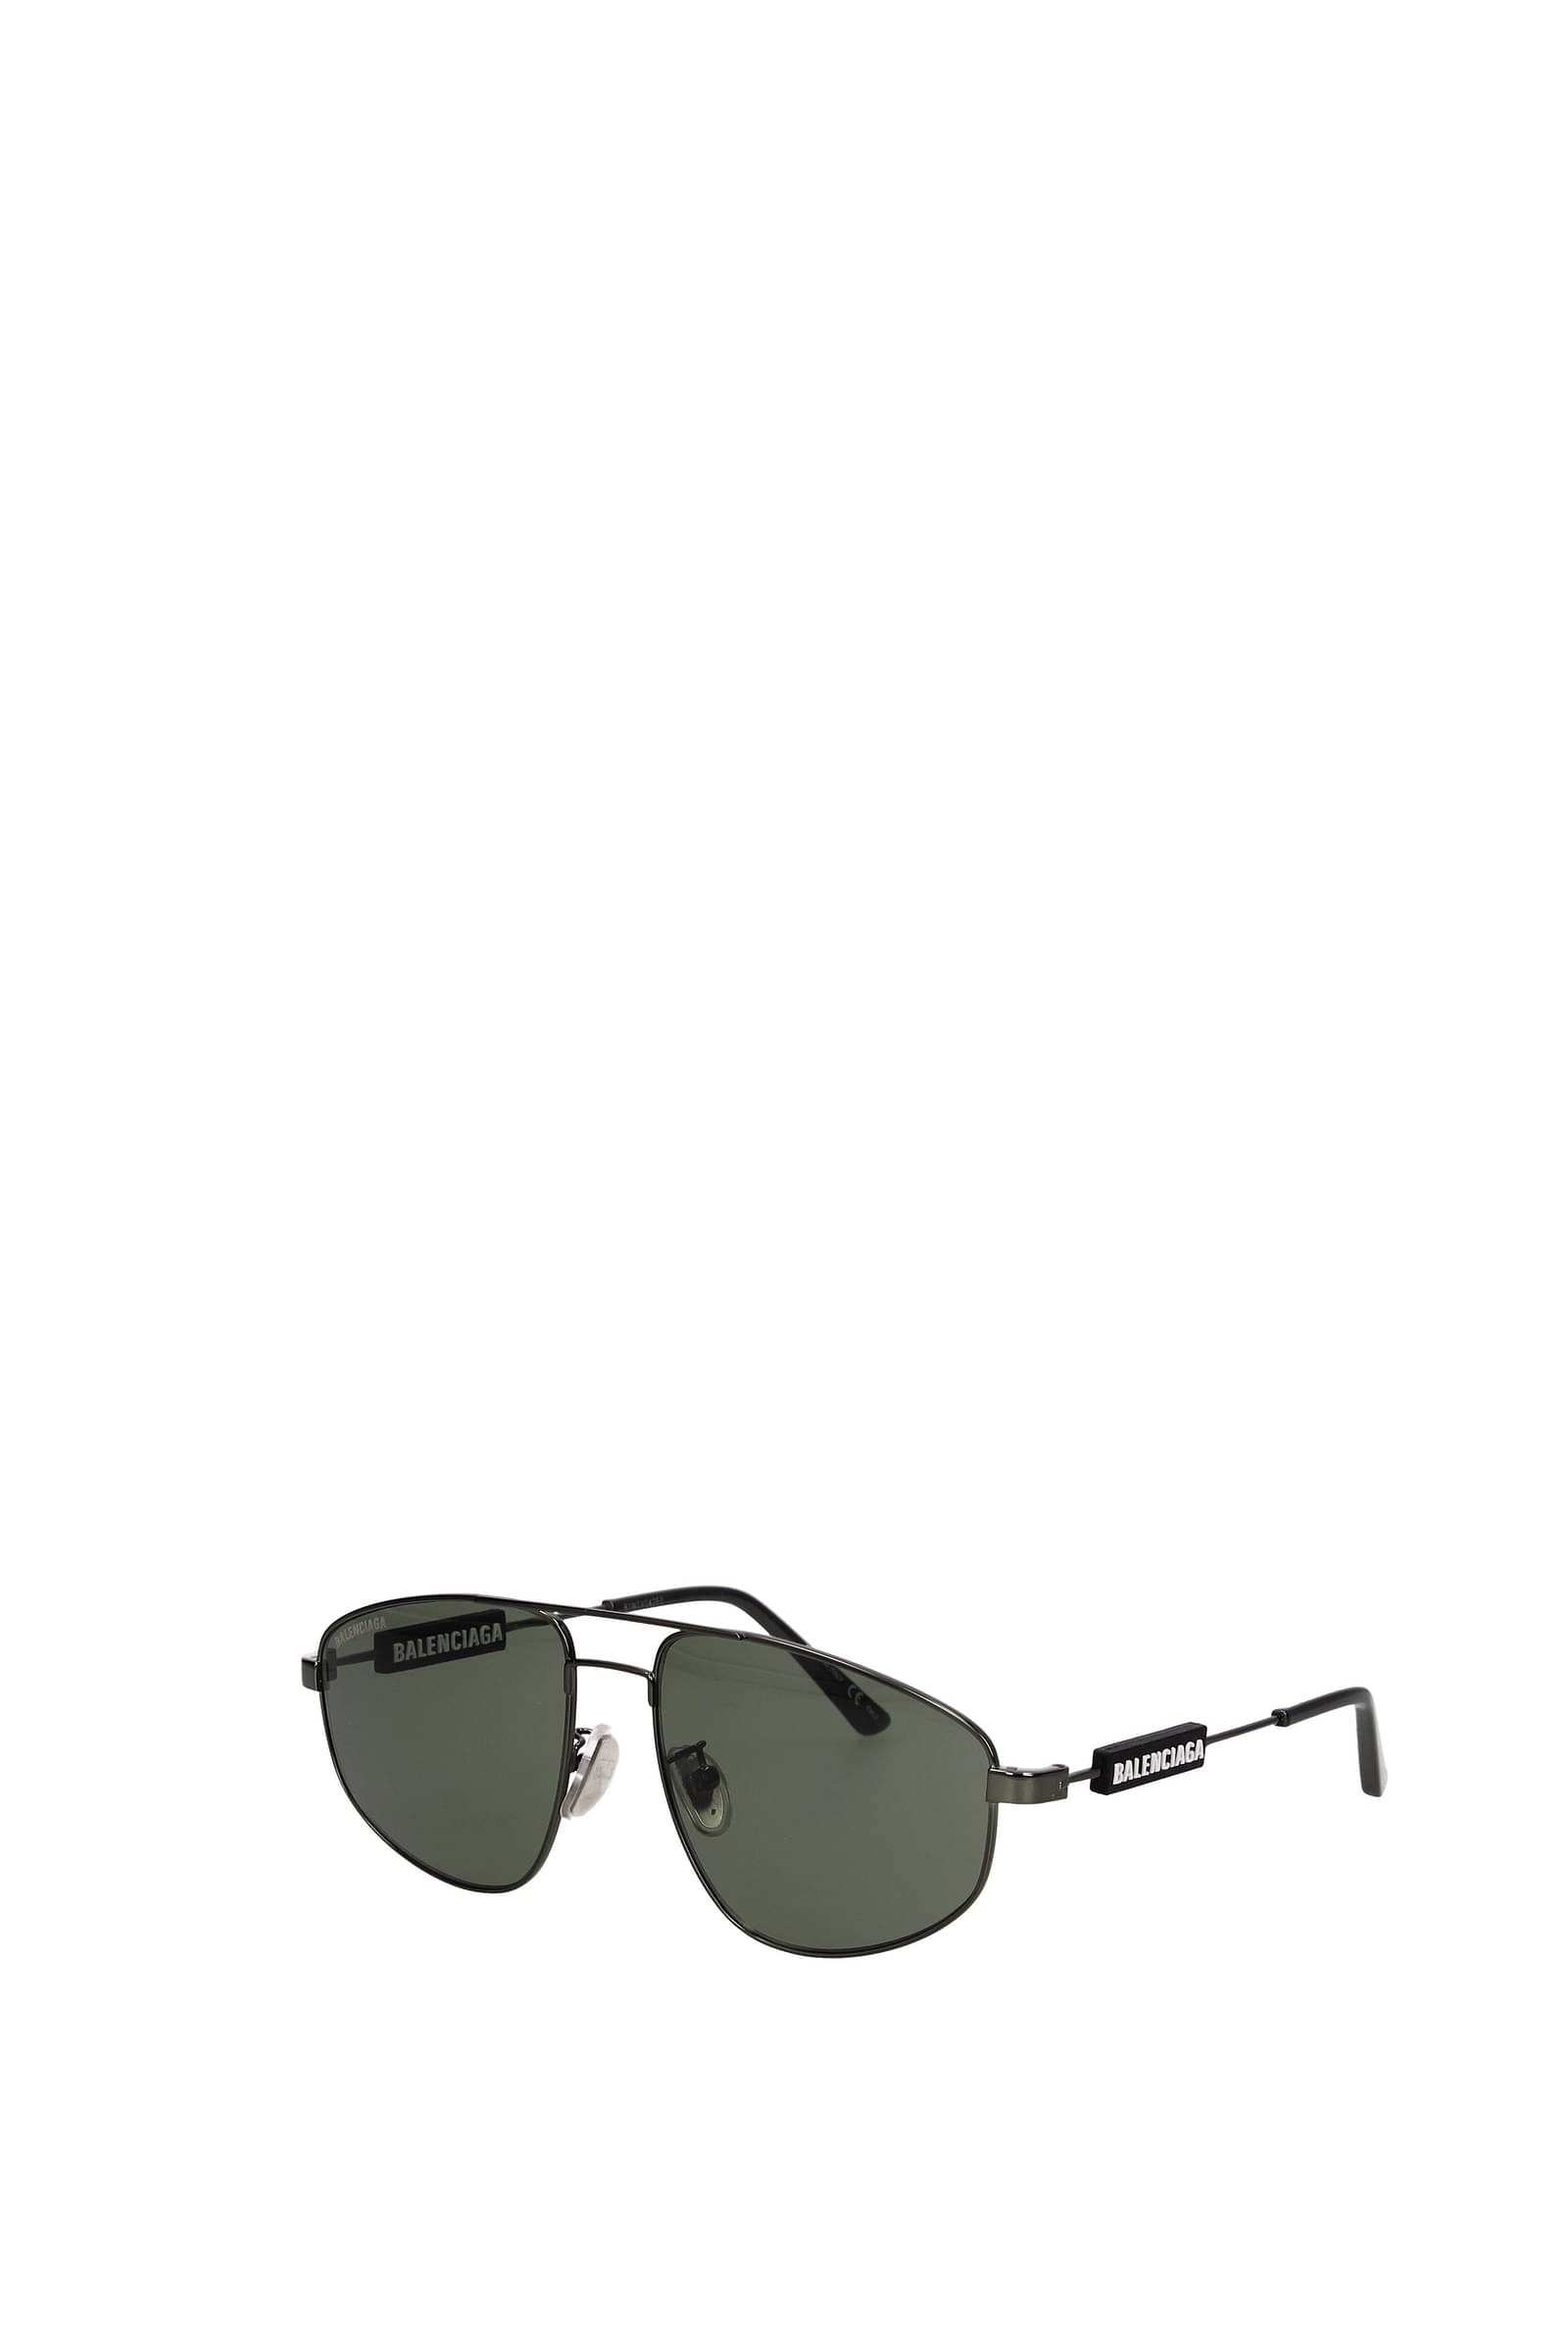 Balenciaga Black Sunglasses  Eyewear for Men and Women  Dillards